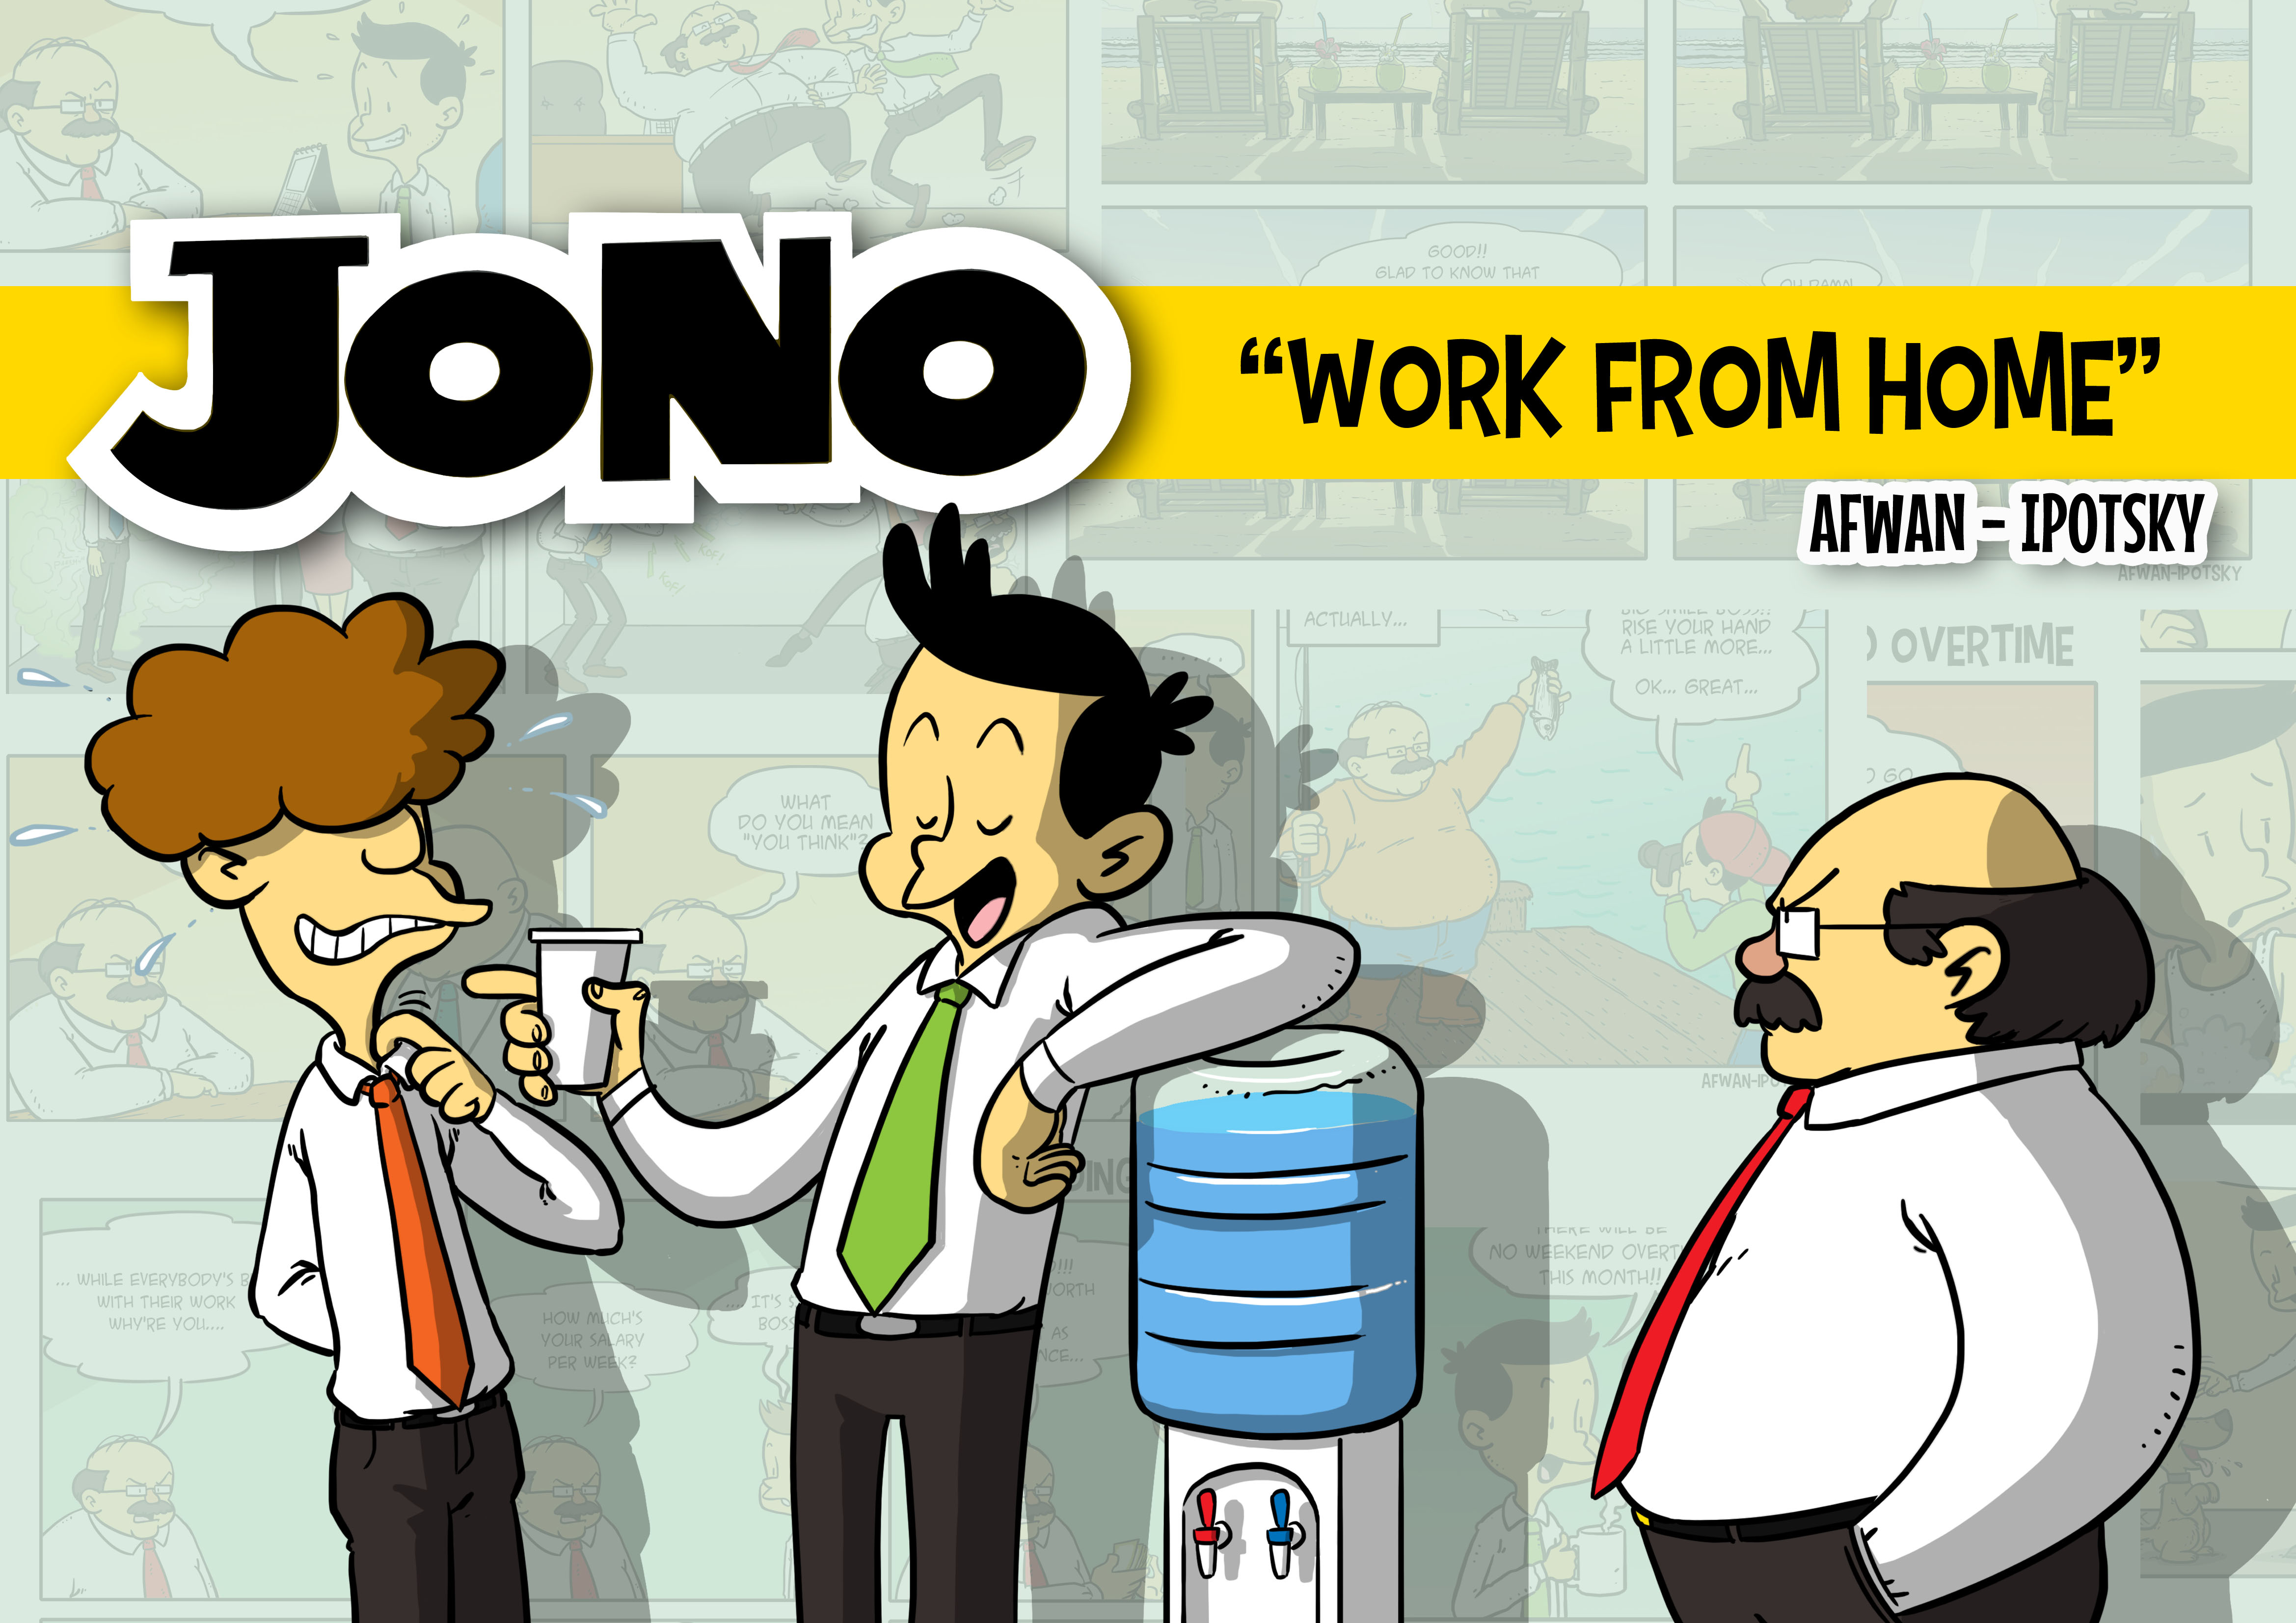 Jono "Work From Home"